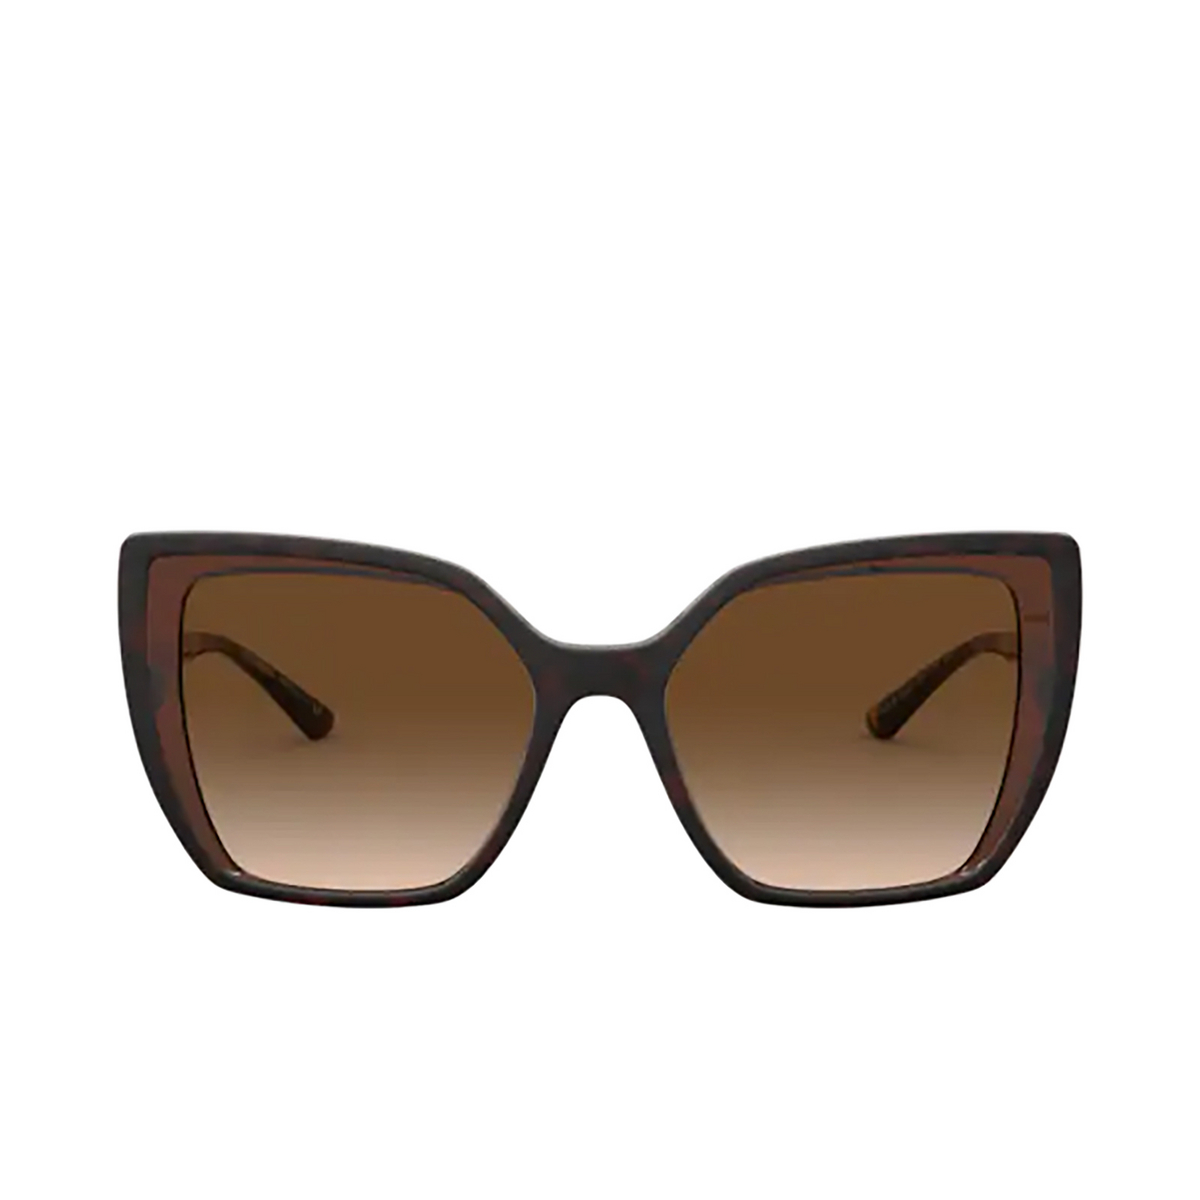 Dolce & Gabbana DG6138 Sunglasses 318513 Havana On Transparent Brown - front view